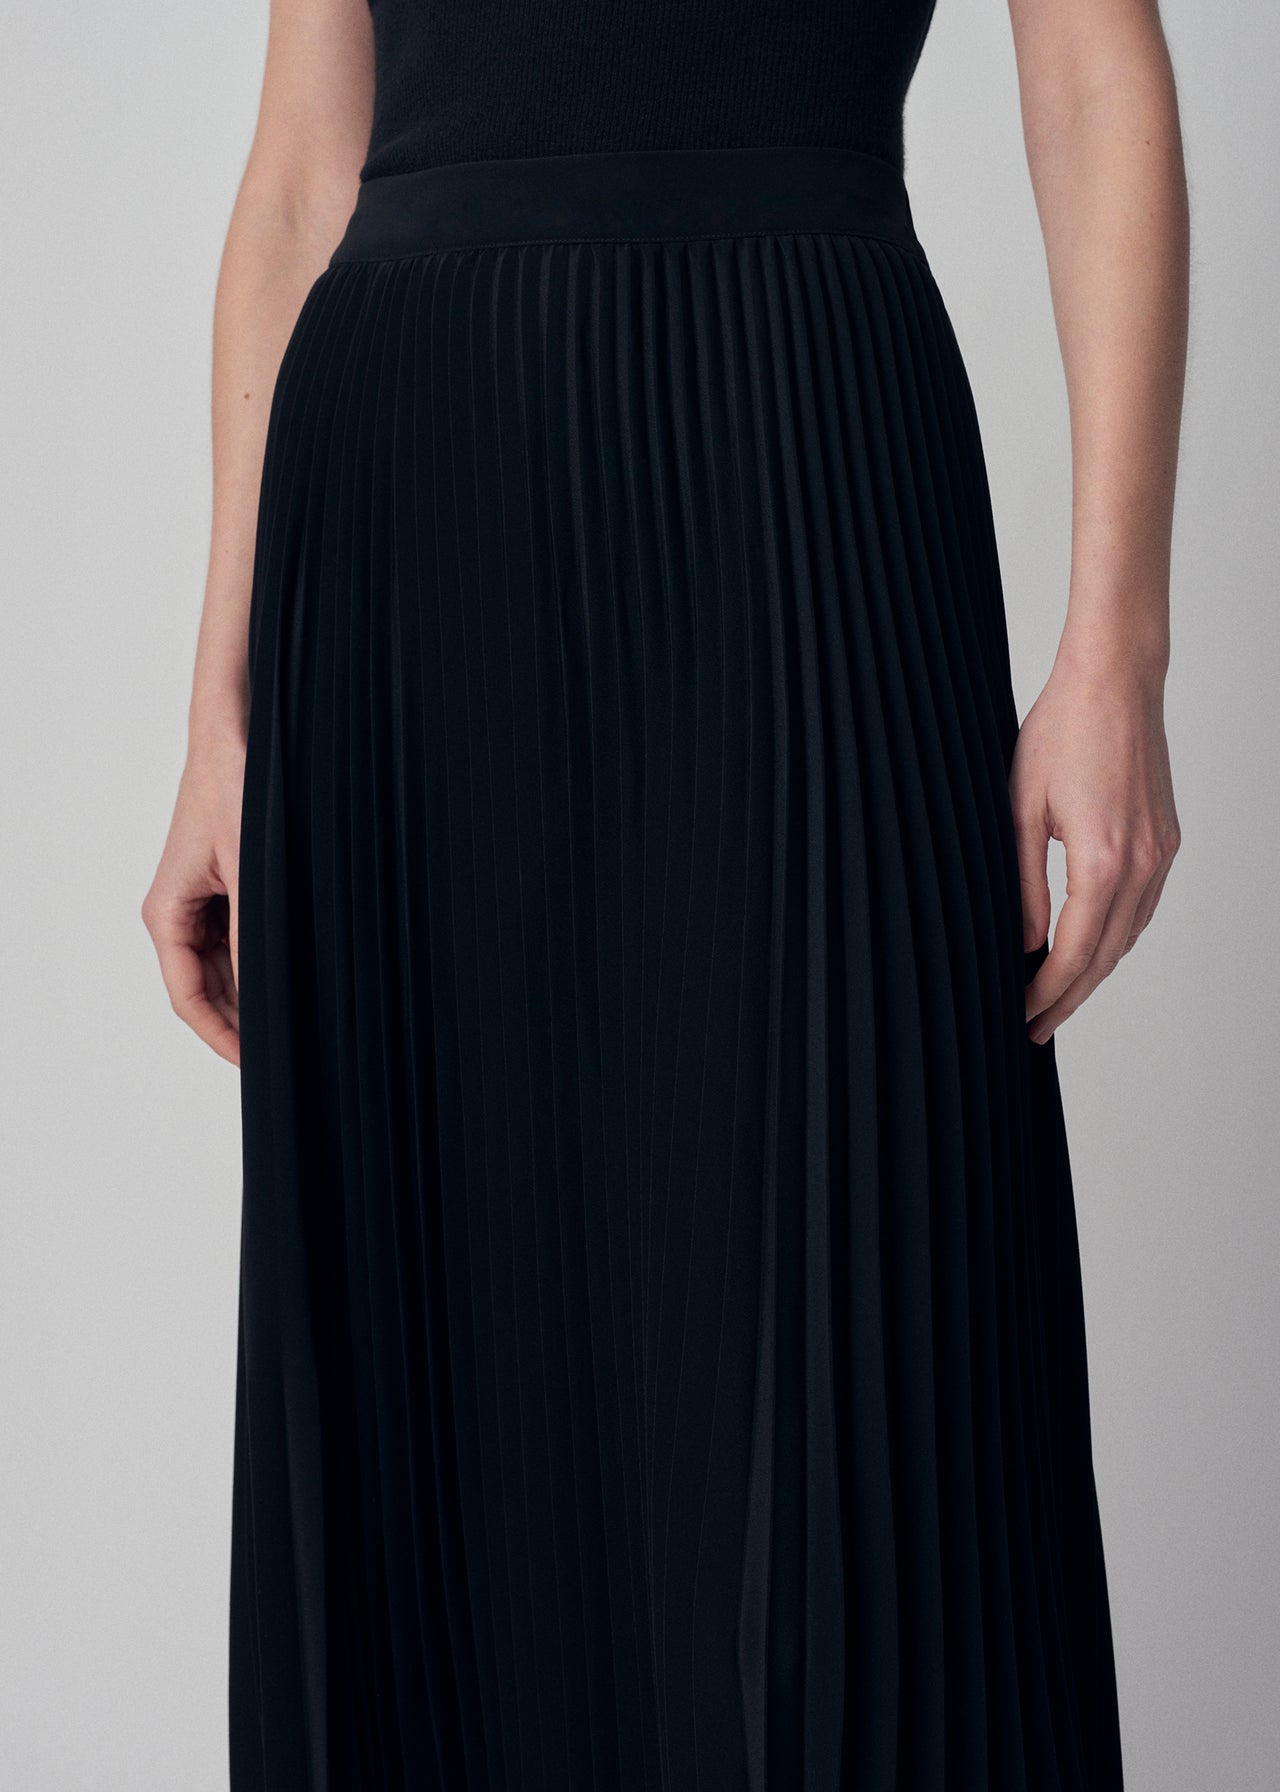 Pleated Elastic Waist Skirt in Stretch Crepe - Black - CO